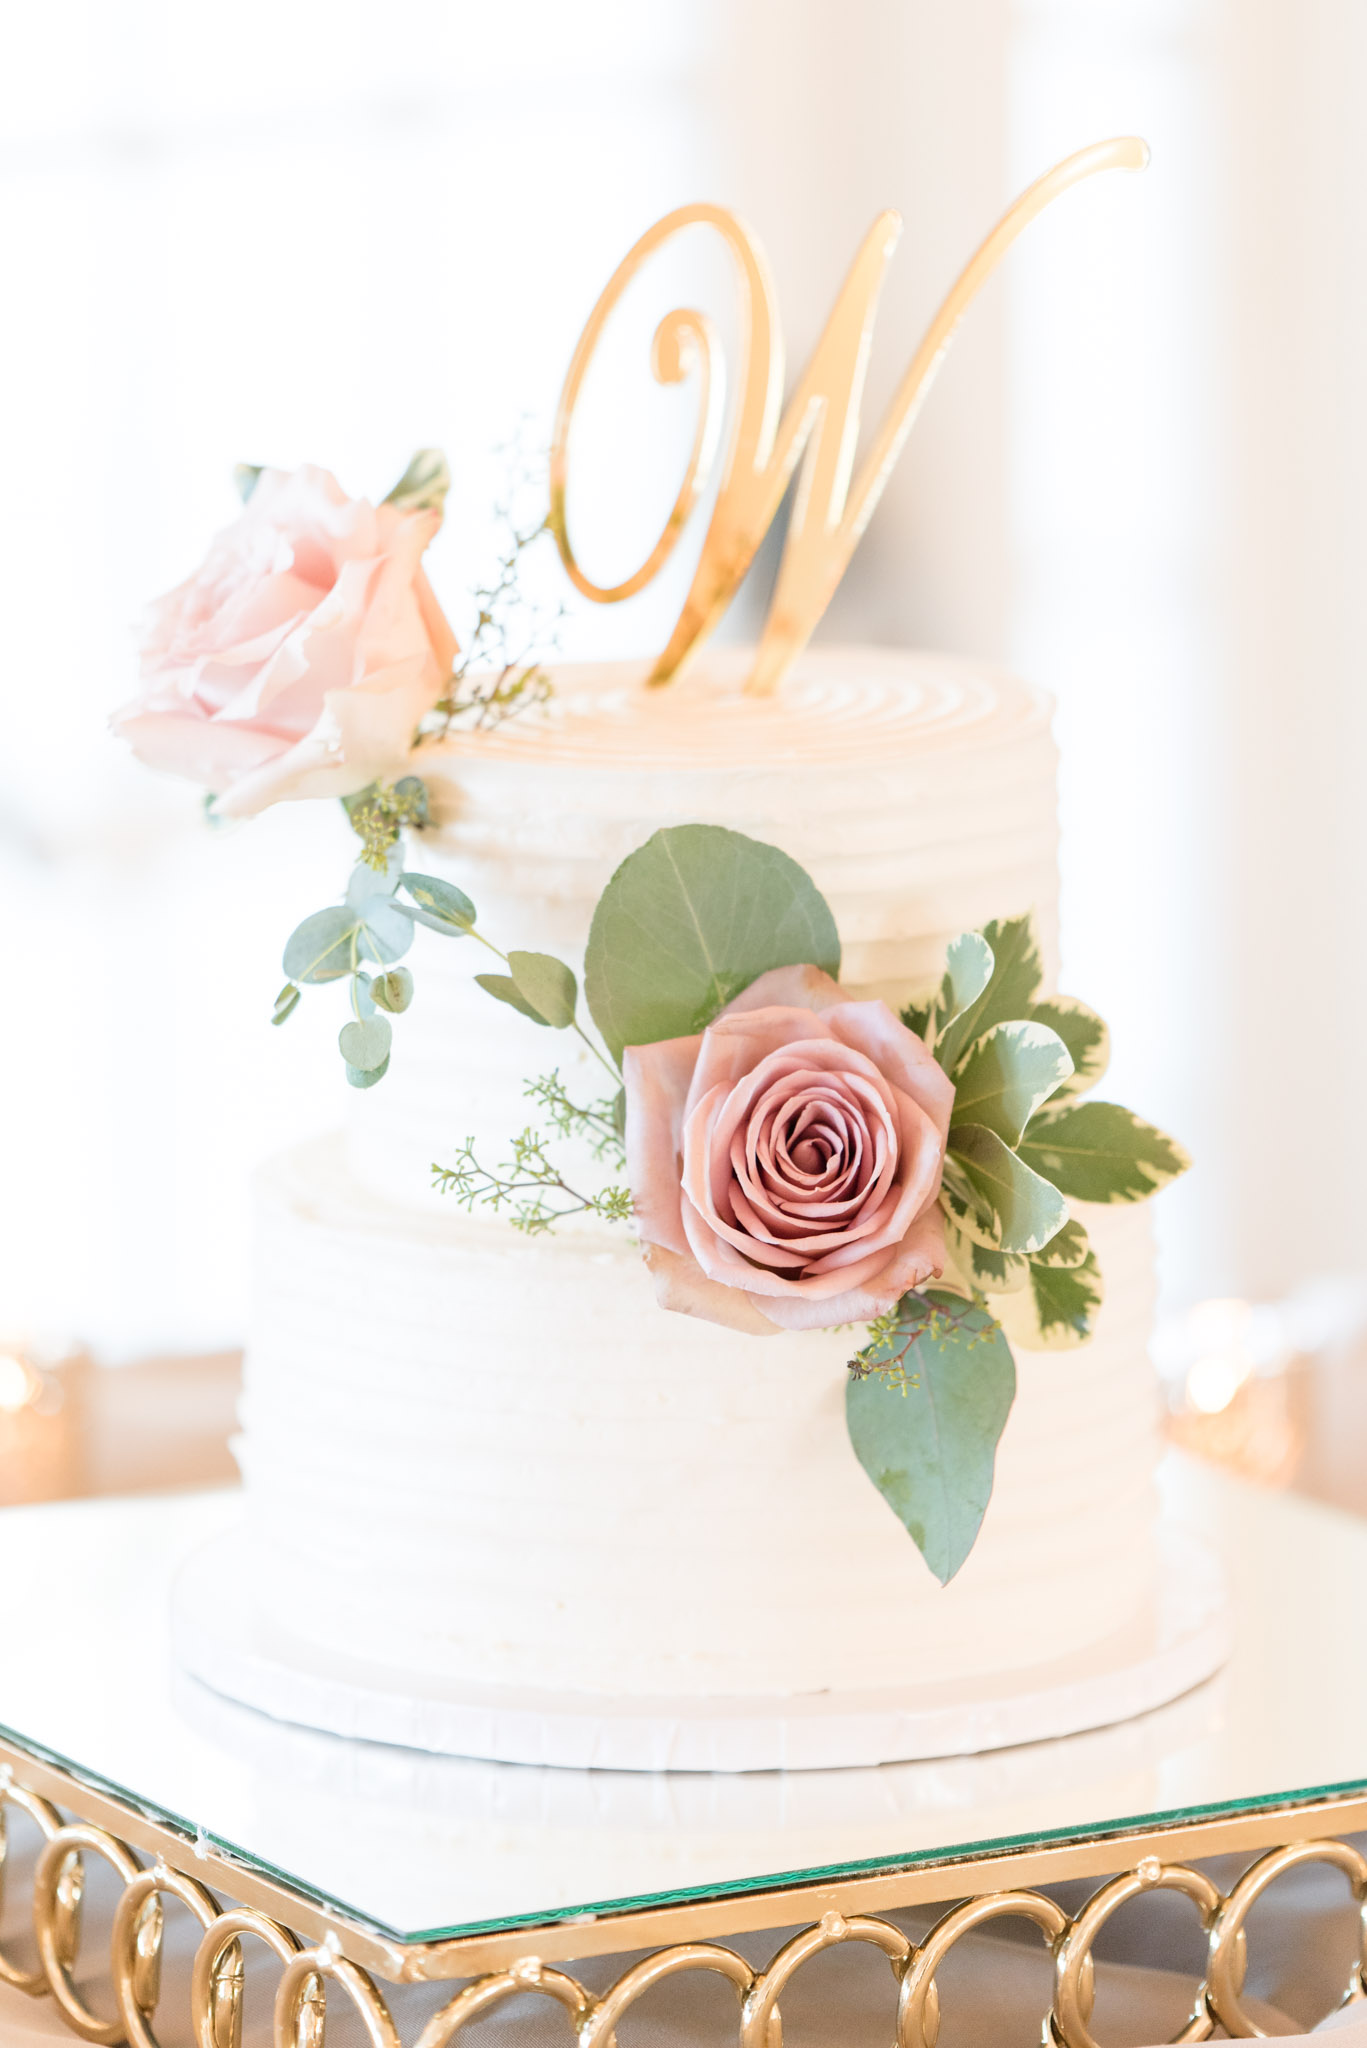 White and blush wedding cake.